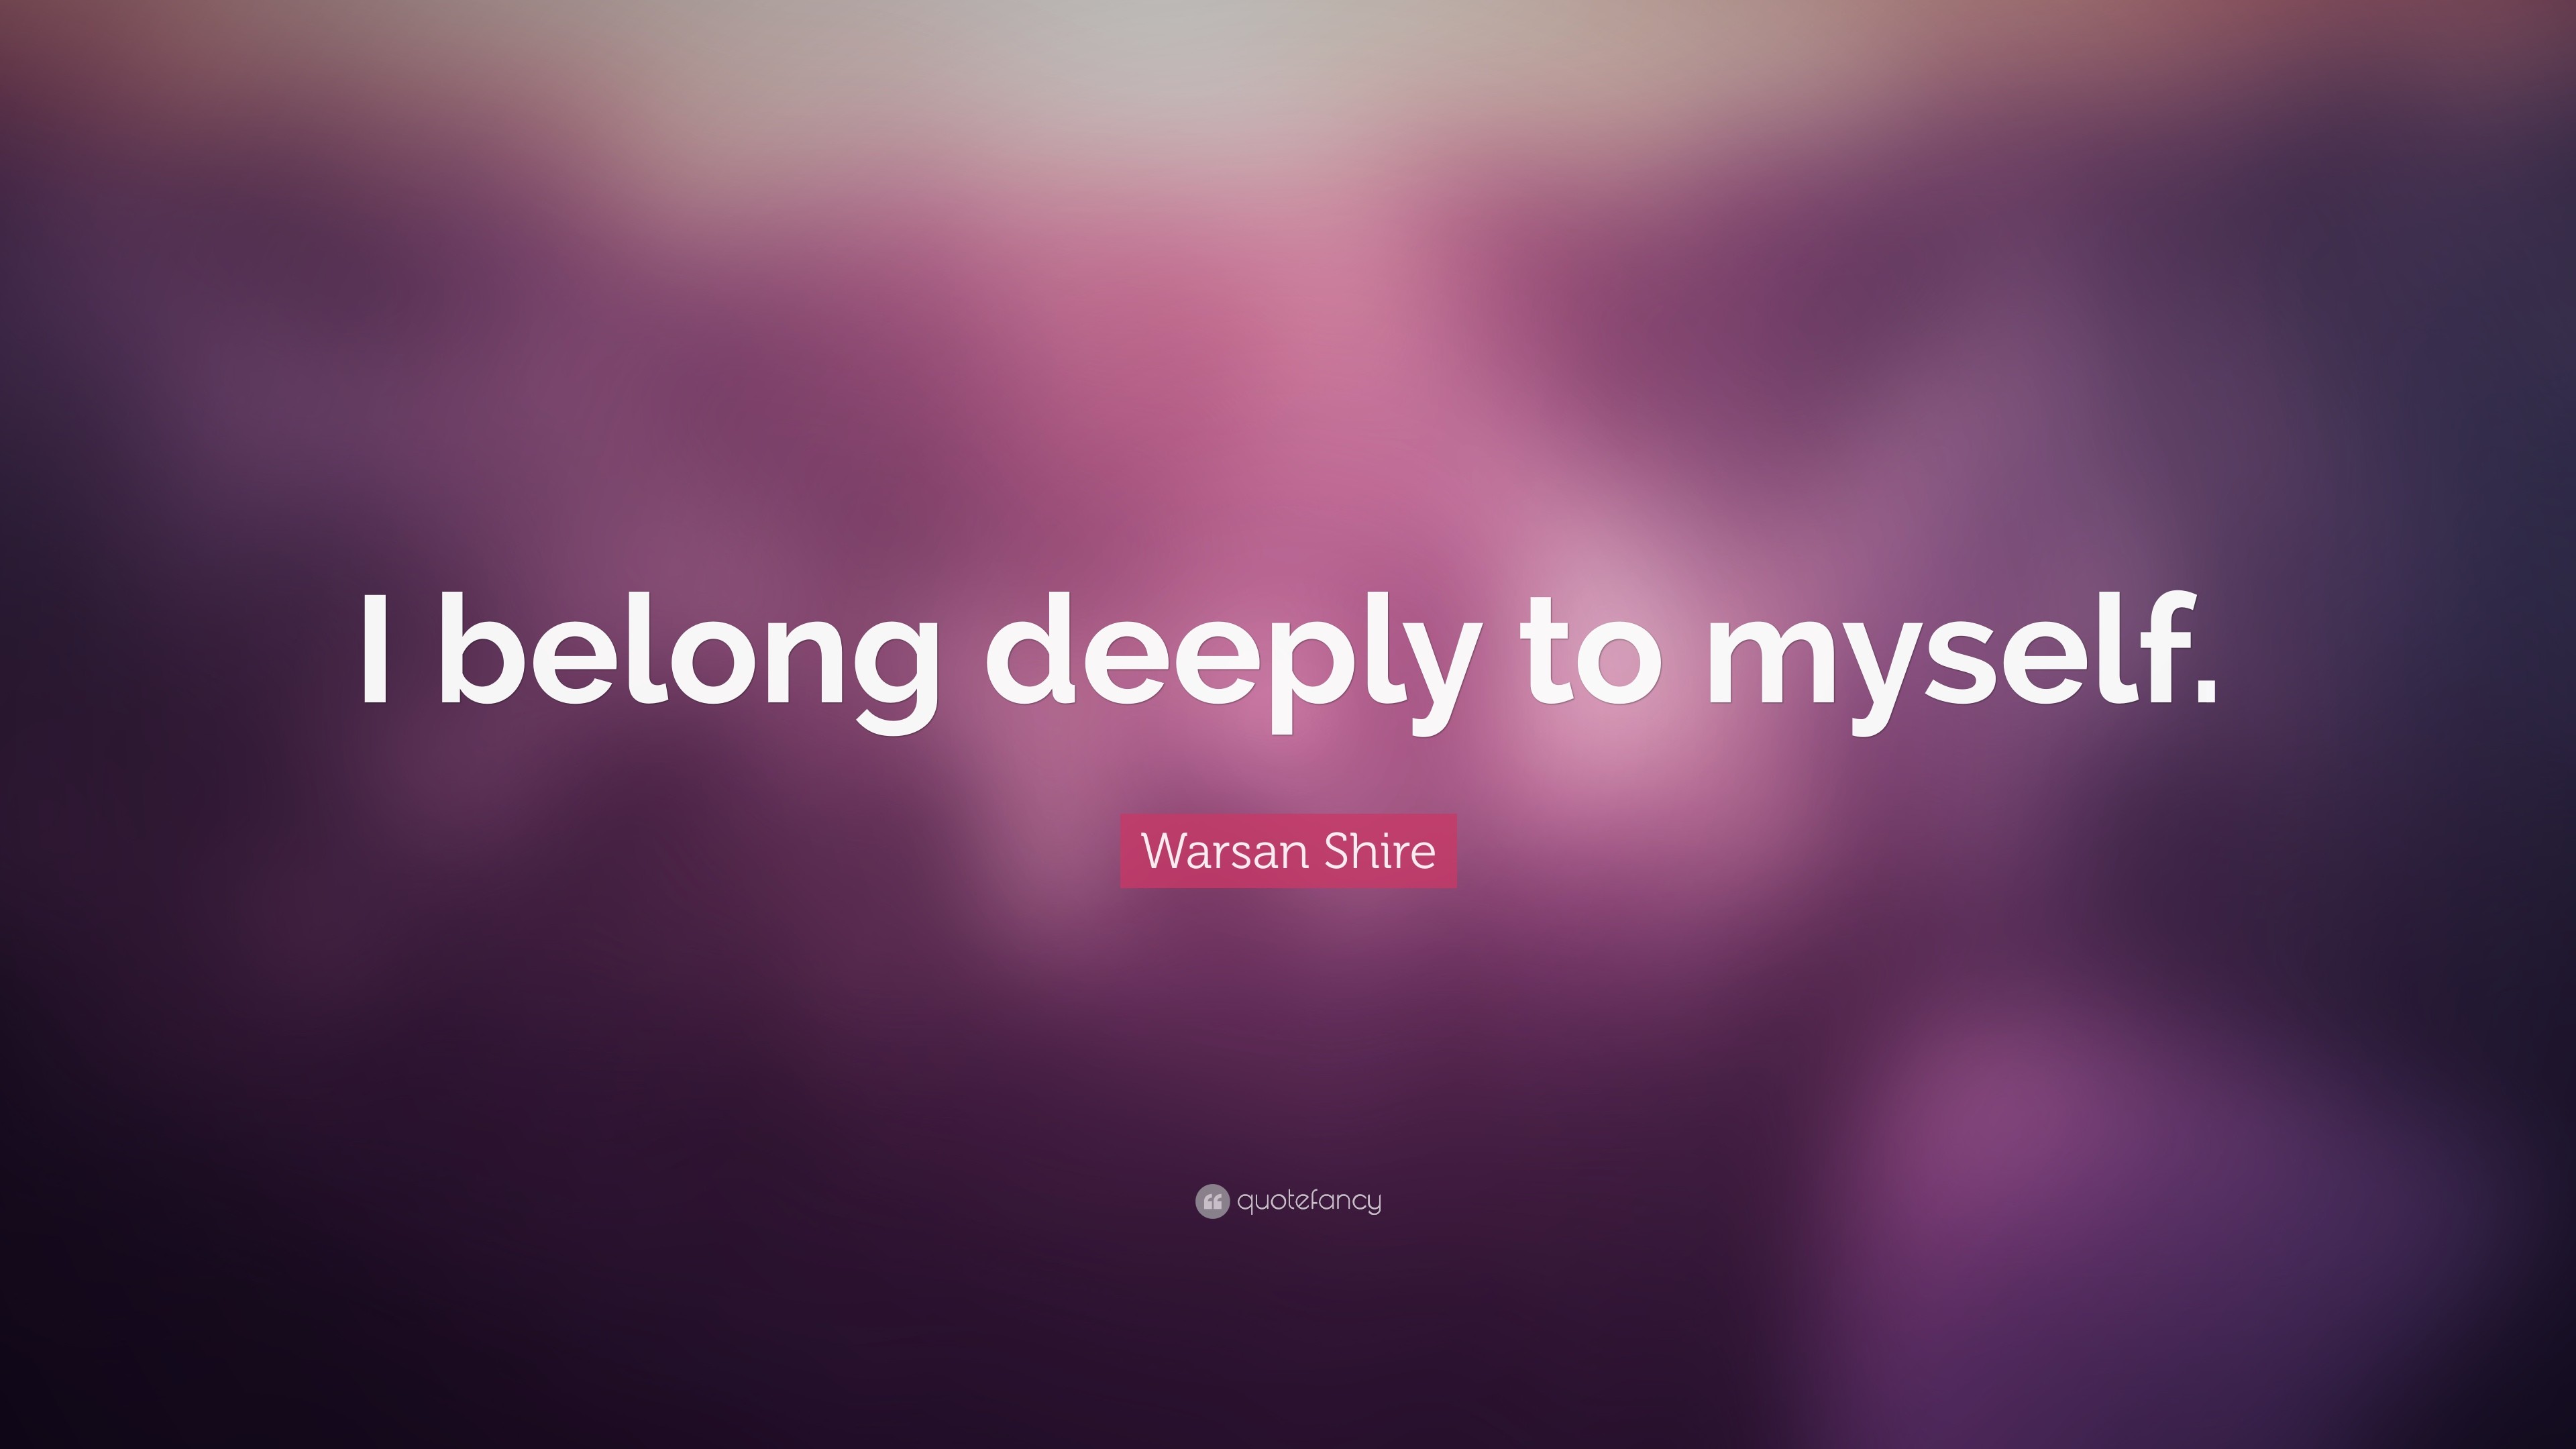 3840x2160 Broken Heart Quotes: “I belong deeply to myself.” — Warsan Shire